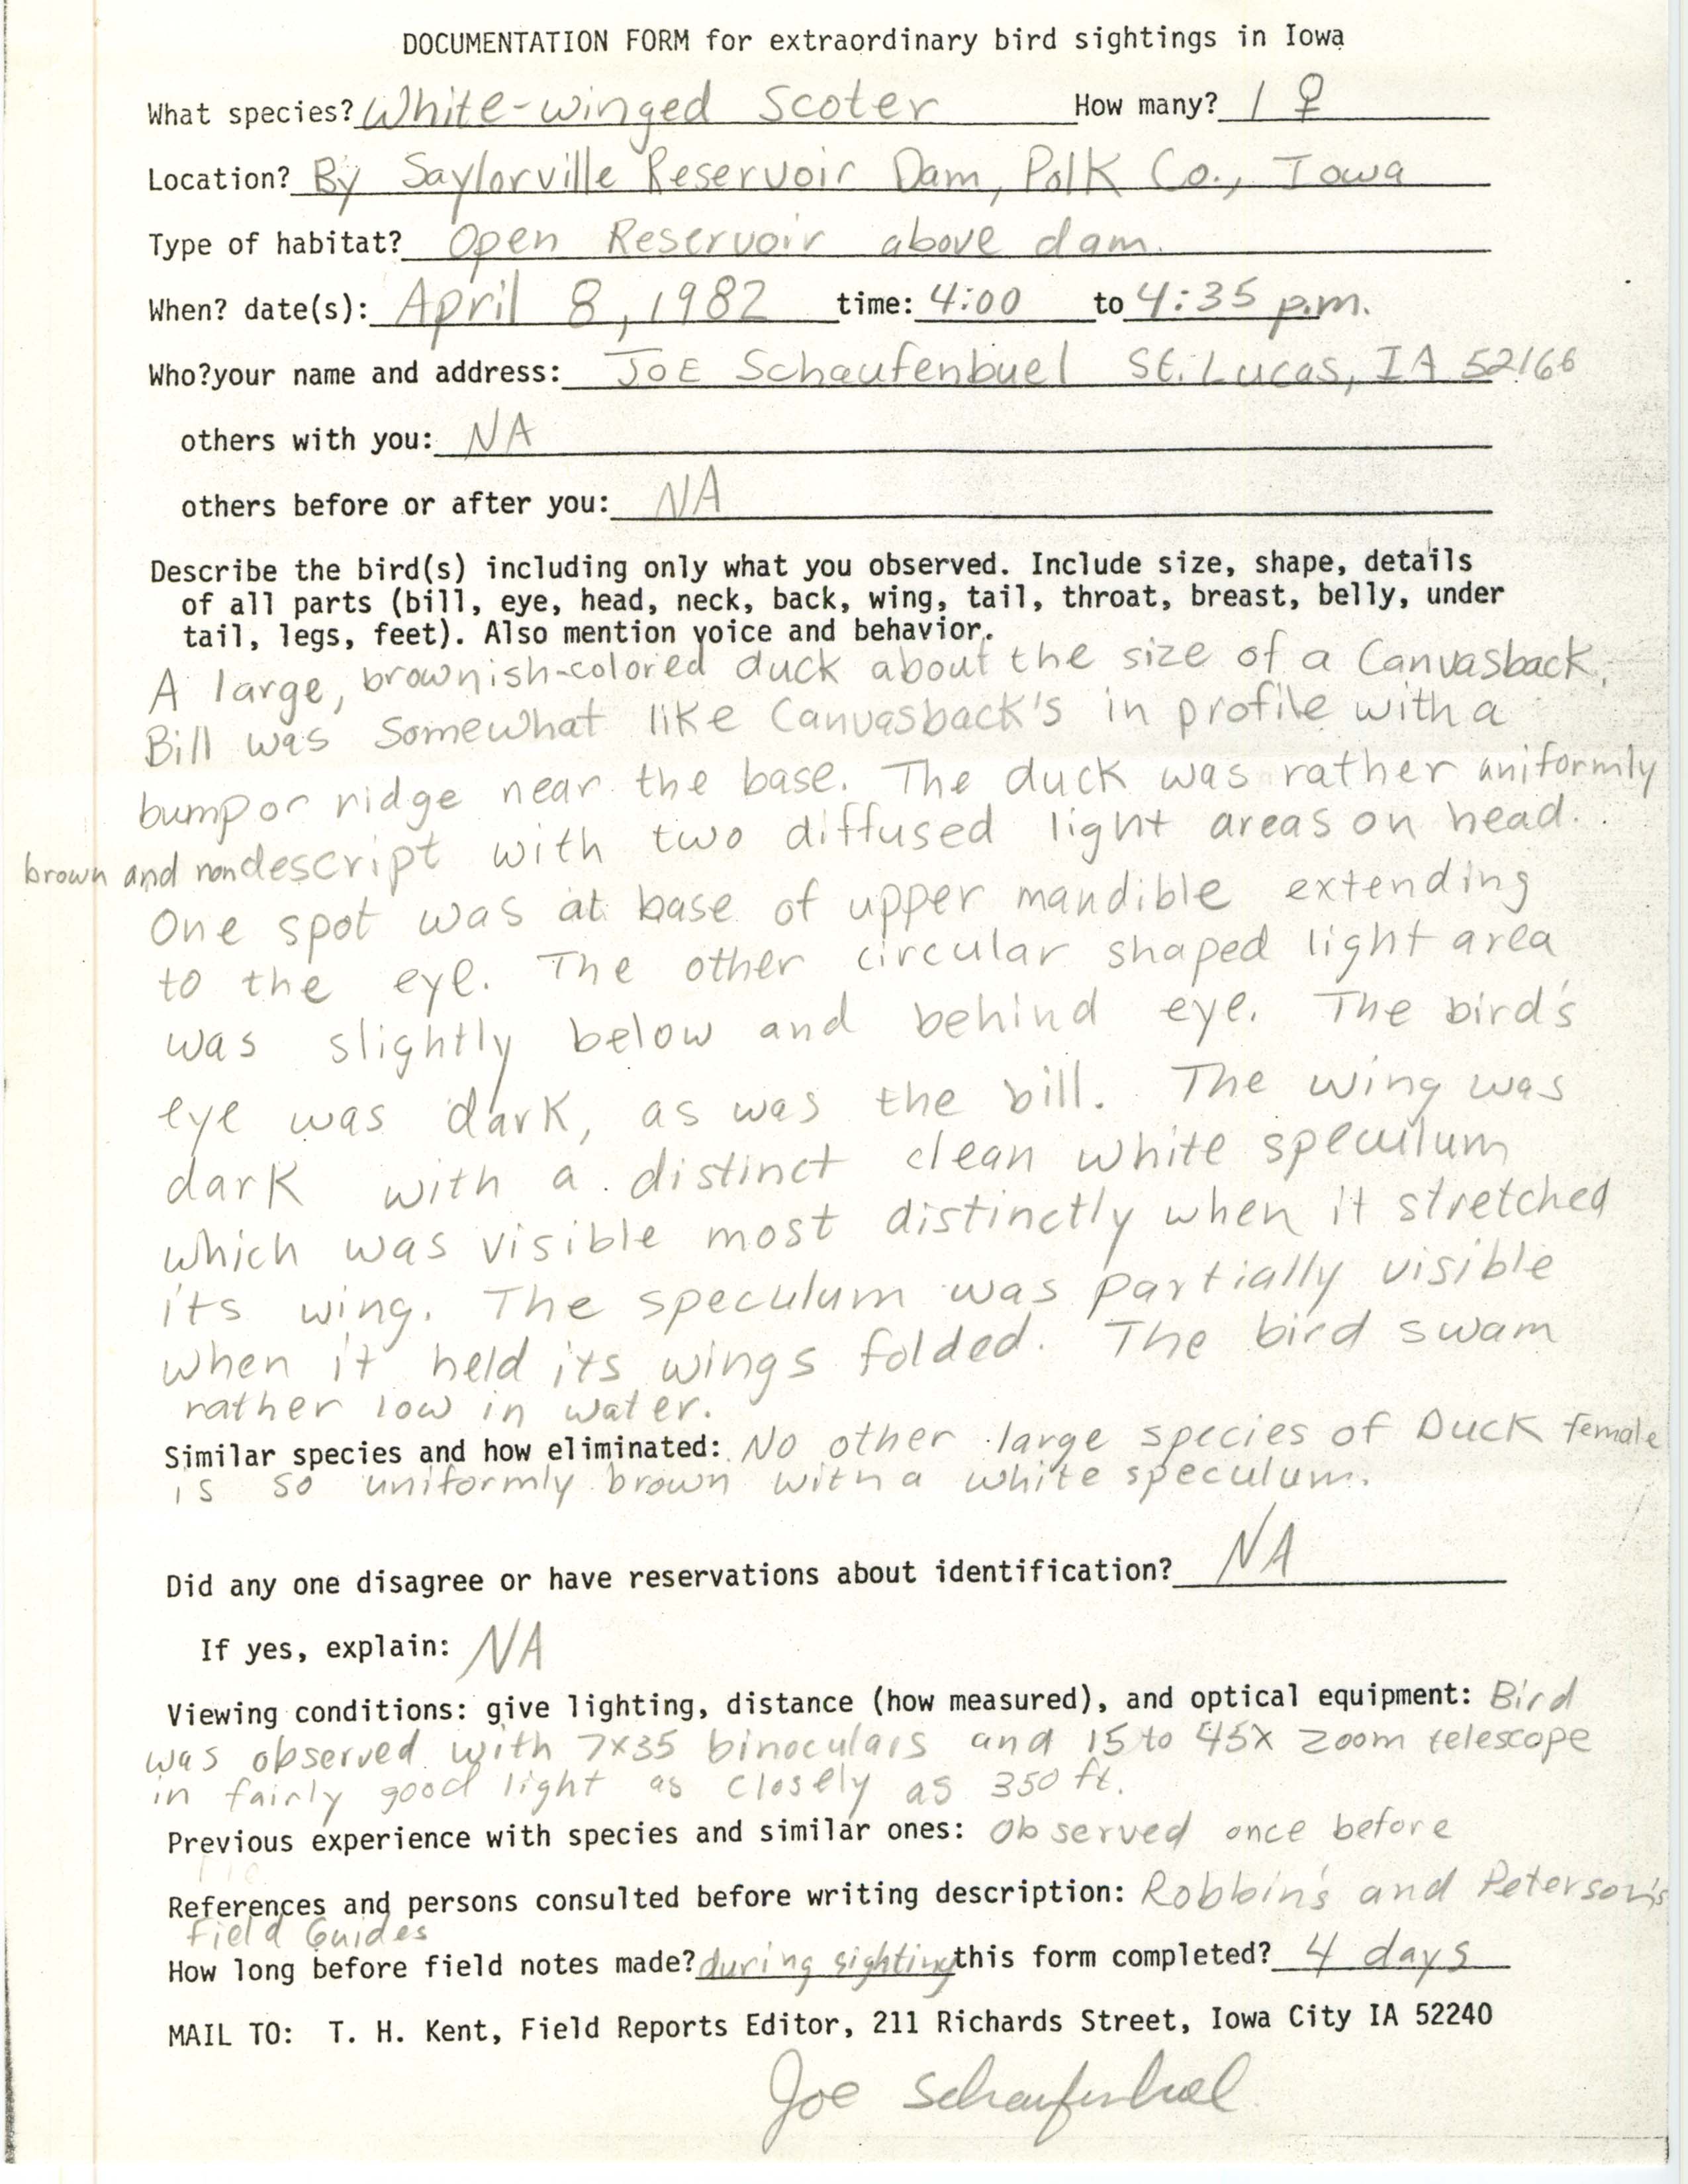 Rare bird documentation form for White-winged Scoter at Saylorville Reservoir Dam, 1982